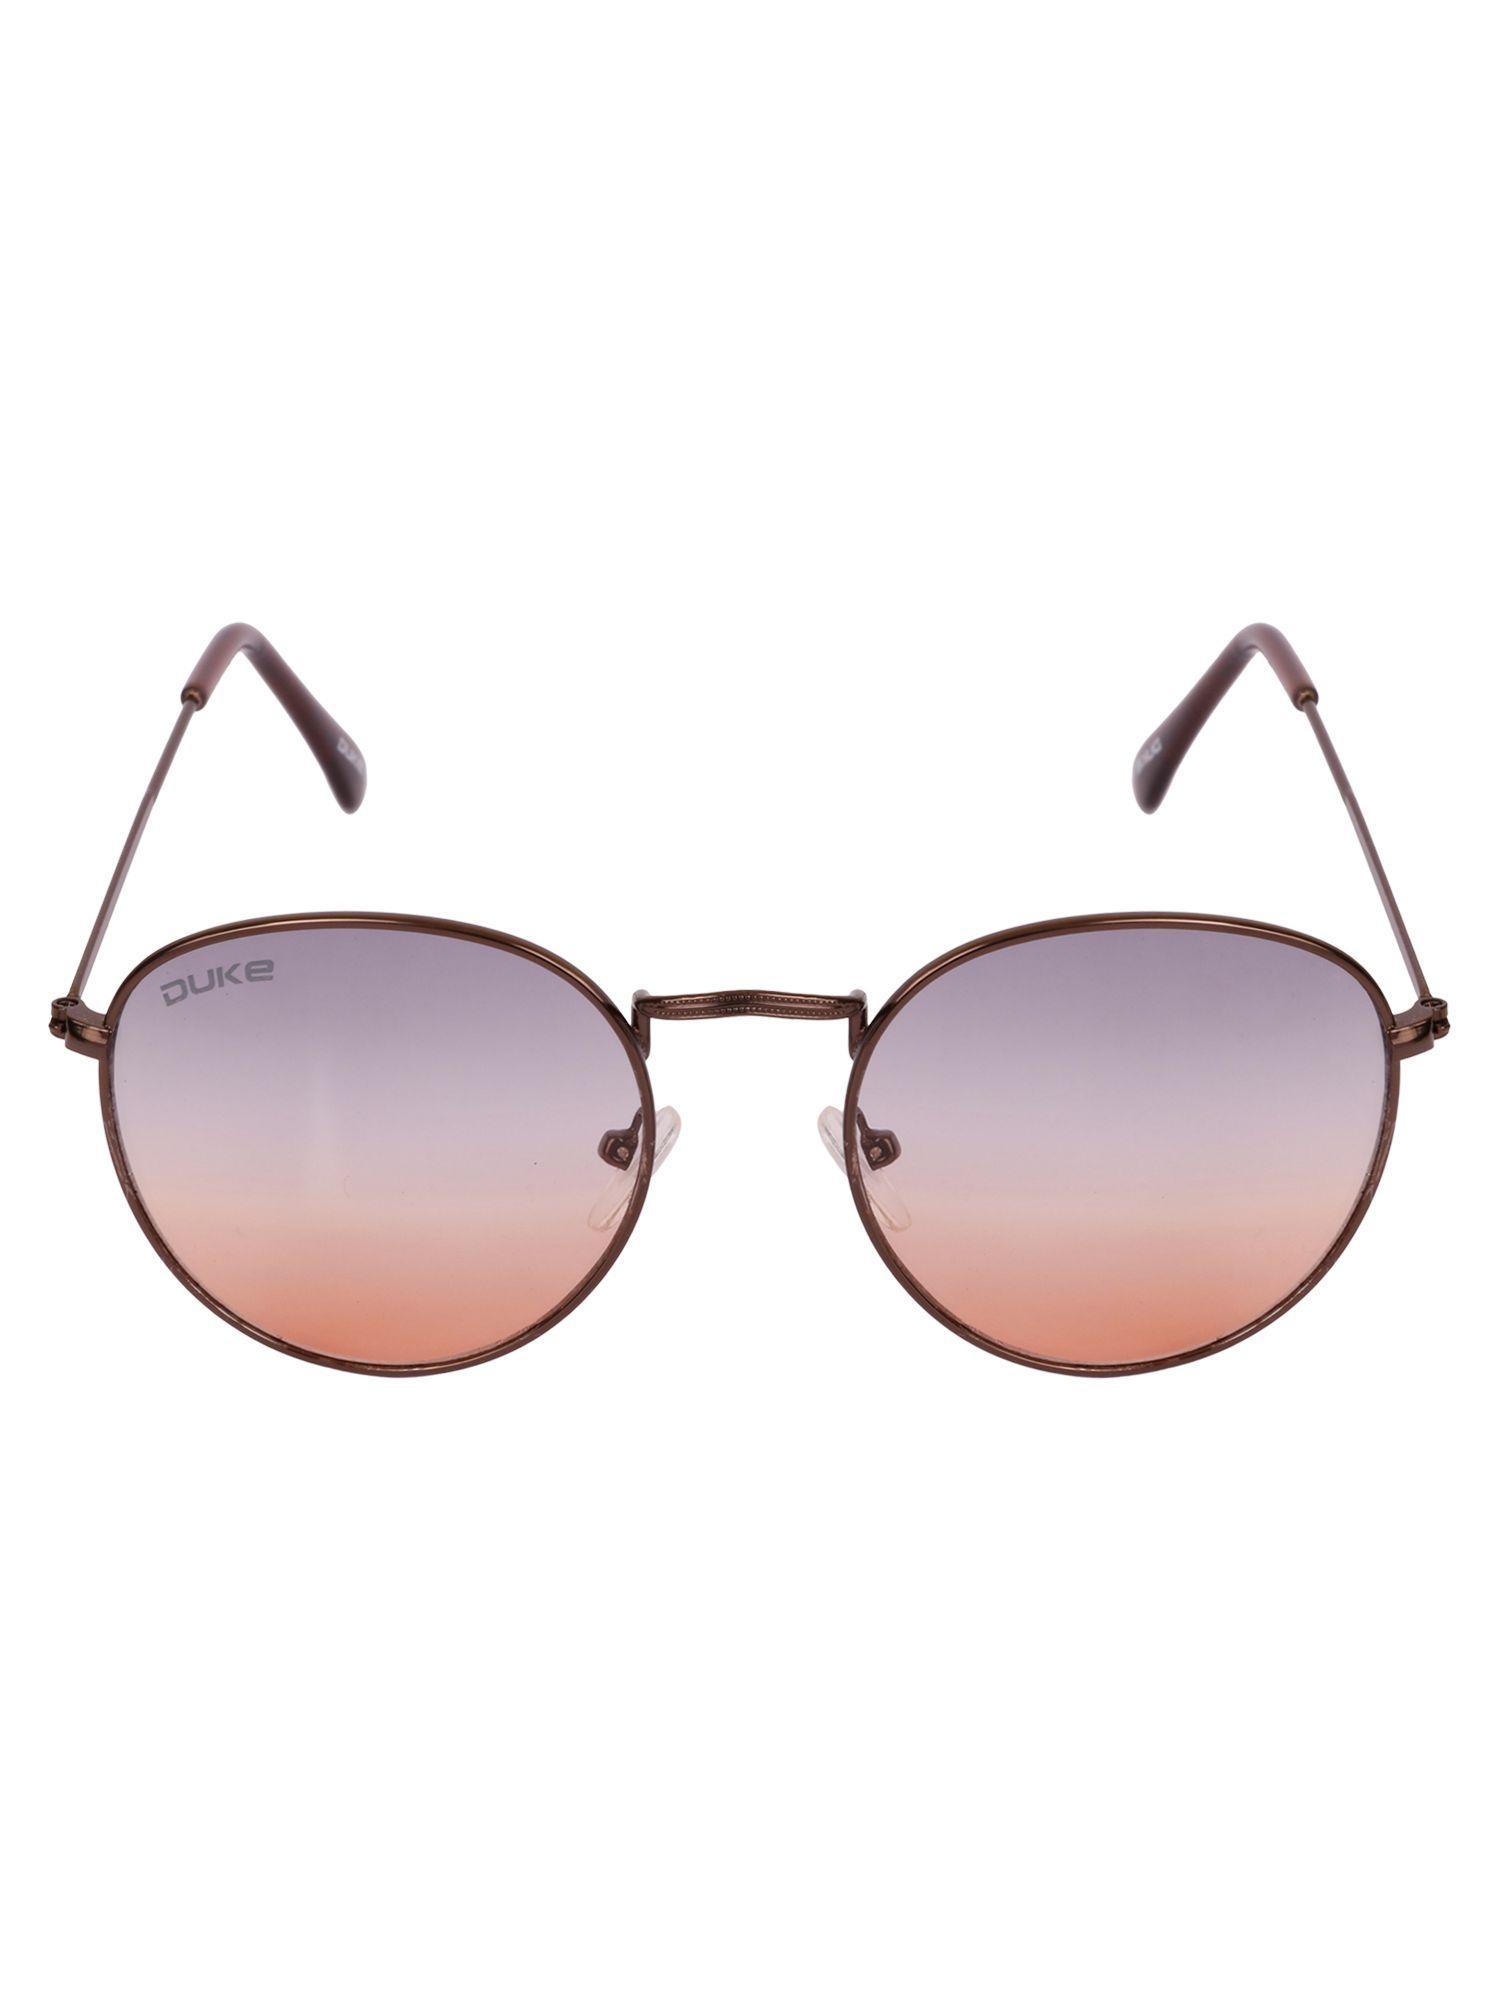 polycarbonate-uv-400-women-small-round-sunglasses--duke-a1874-c4